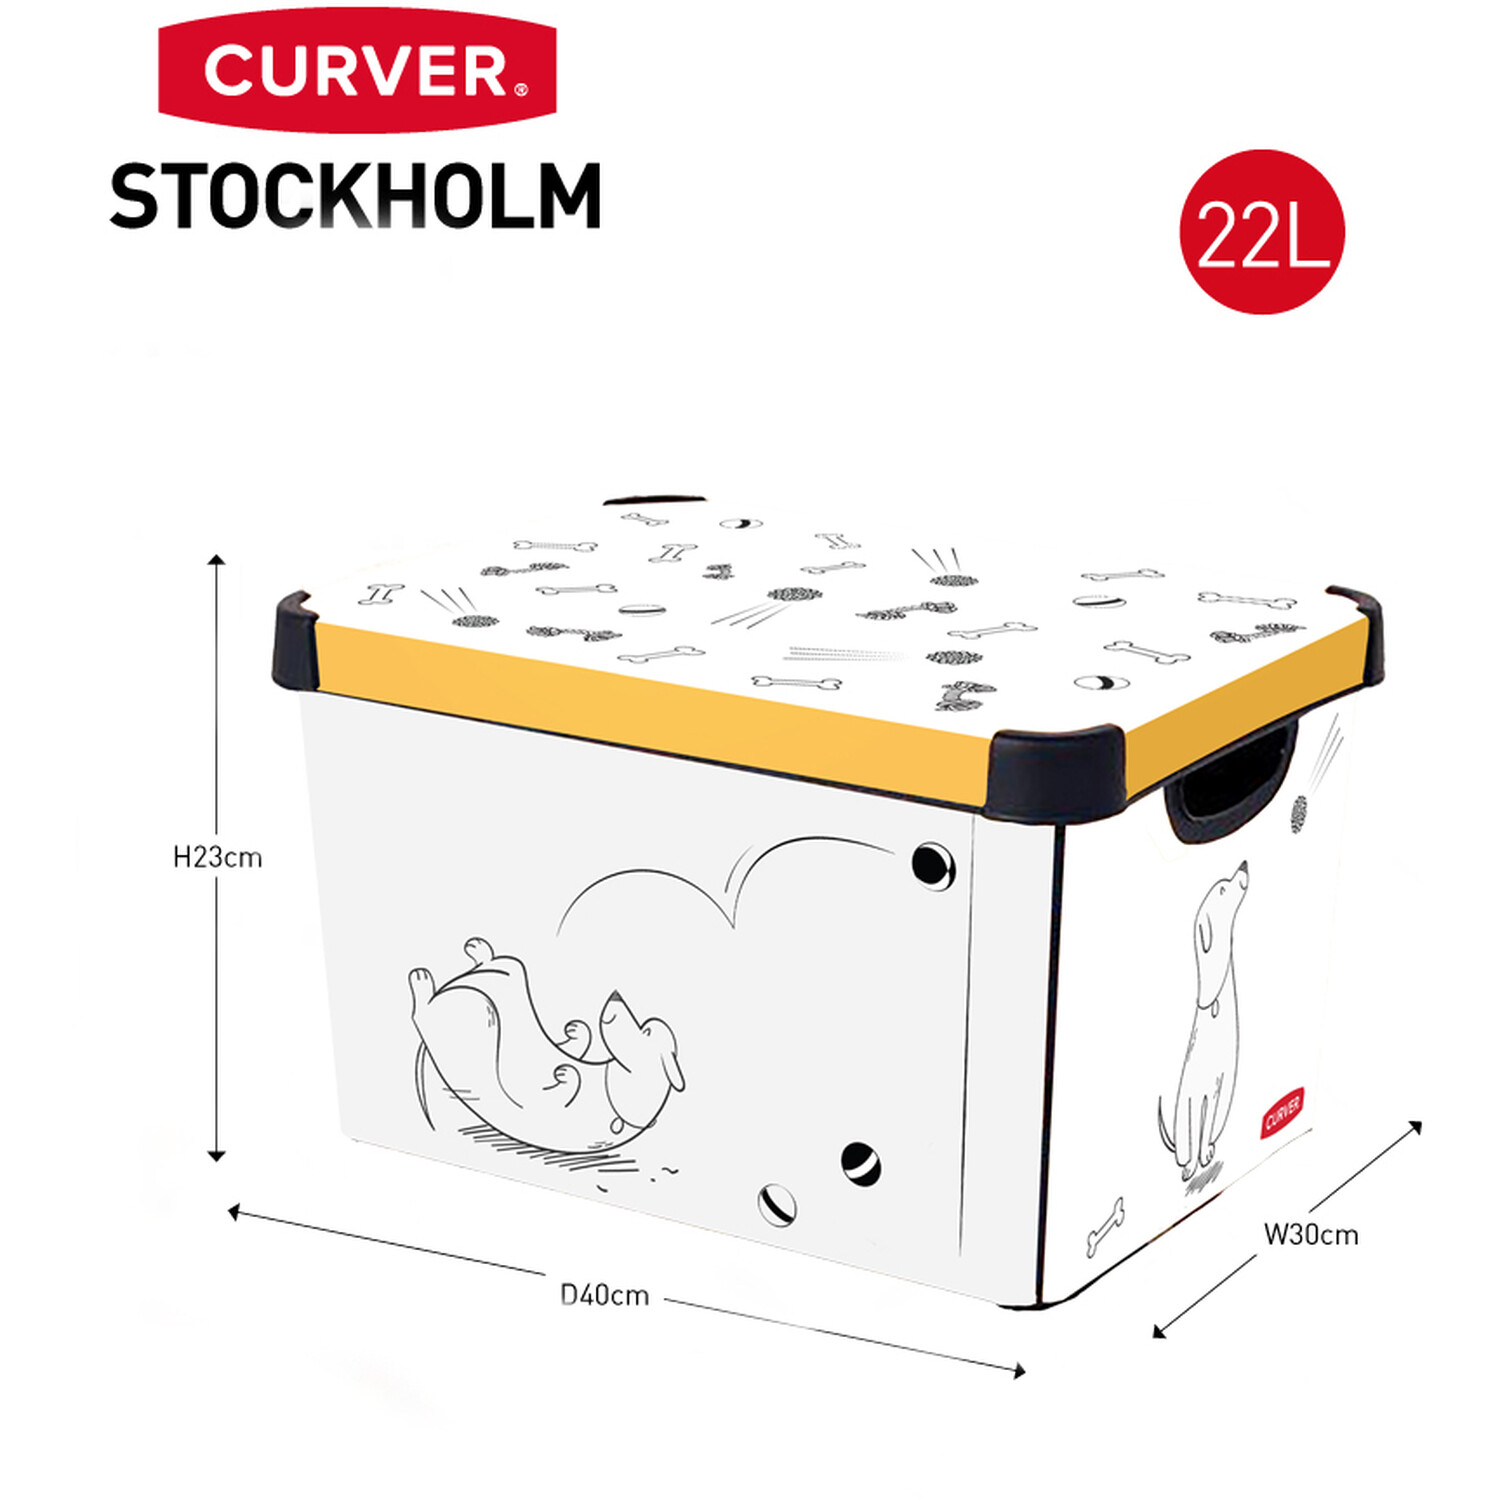 Curver Stockholm 22L Pet Toy Storage Box Image 6